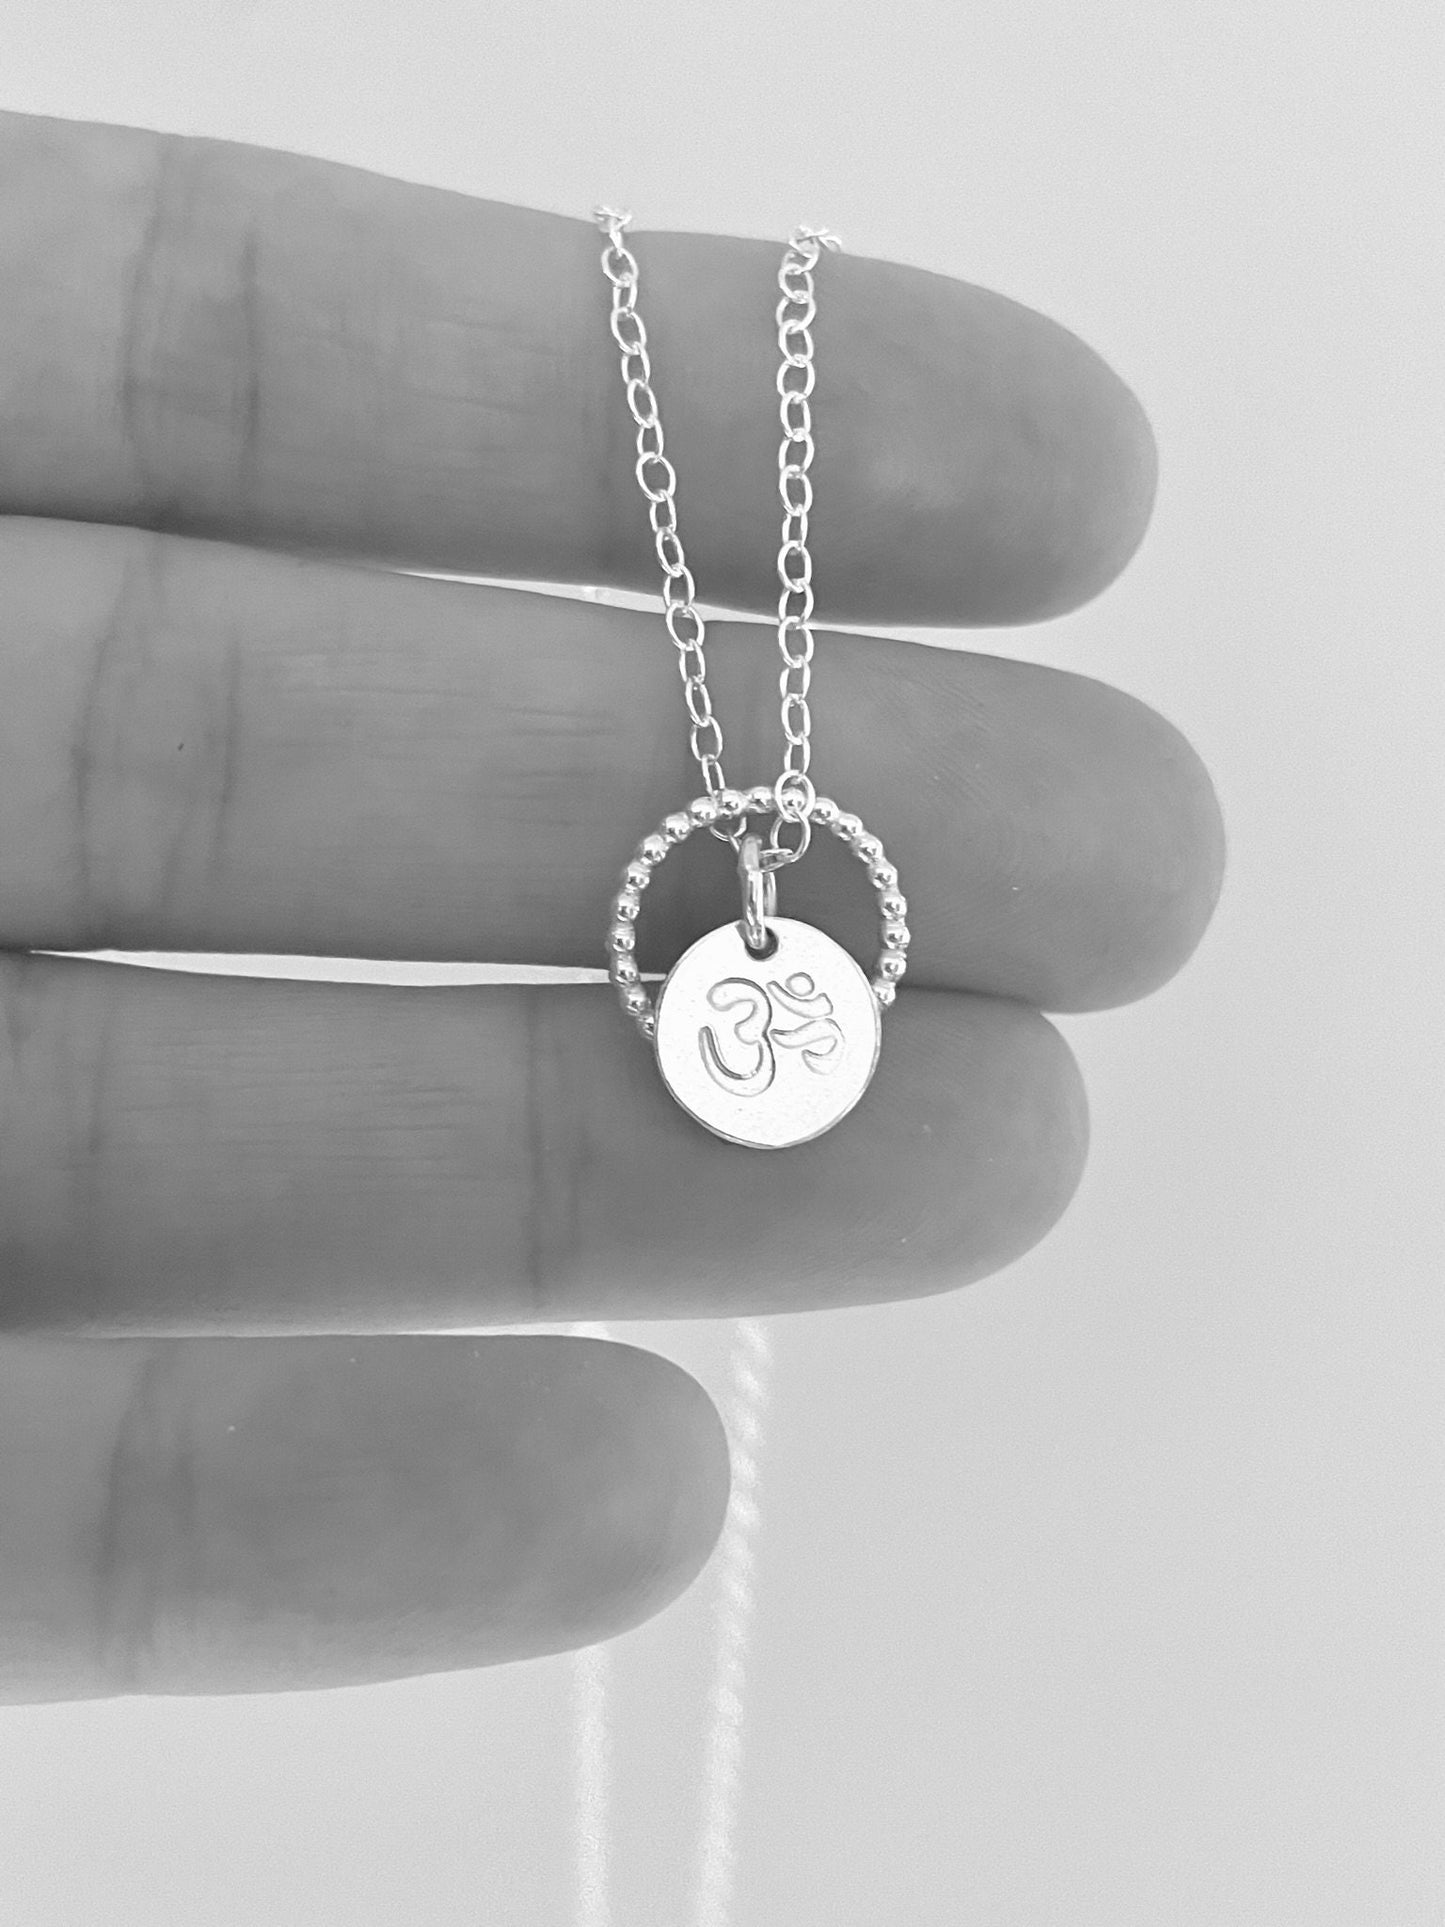 Silver Om necklace, meditation necklace